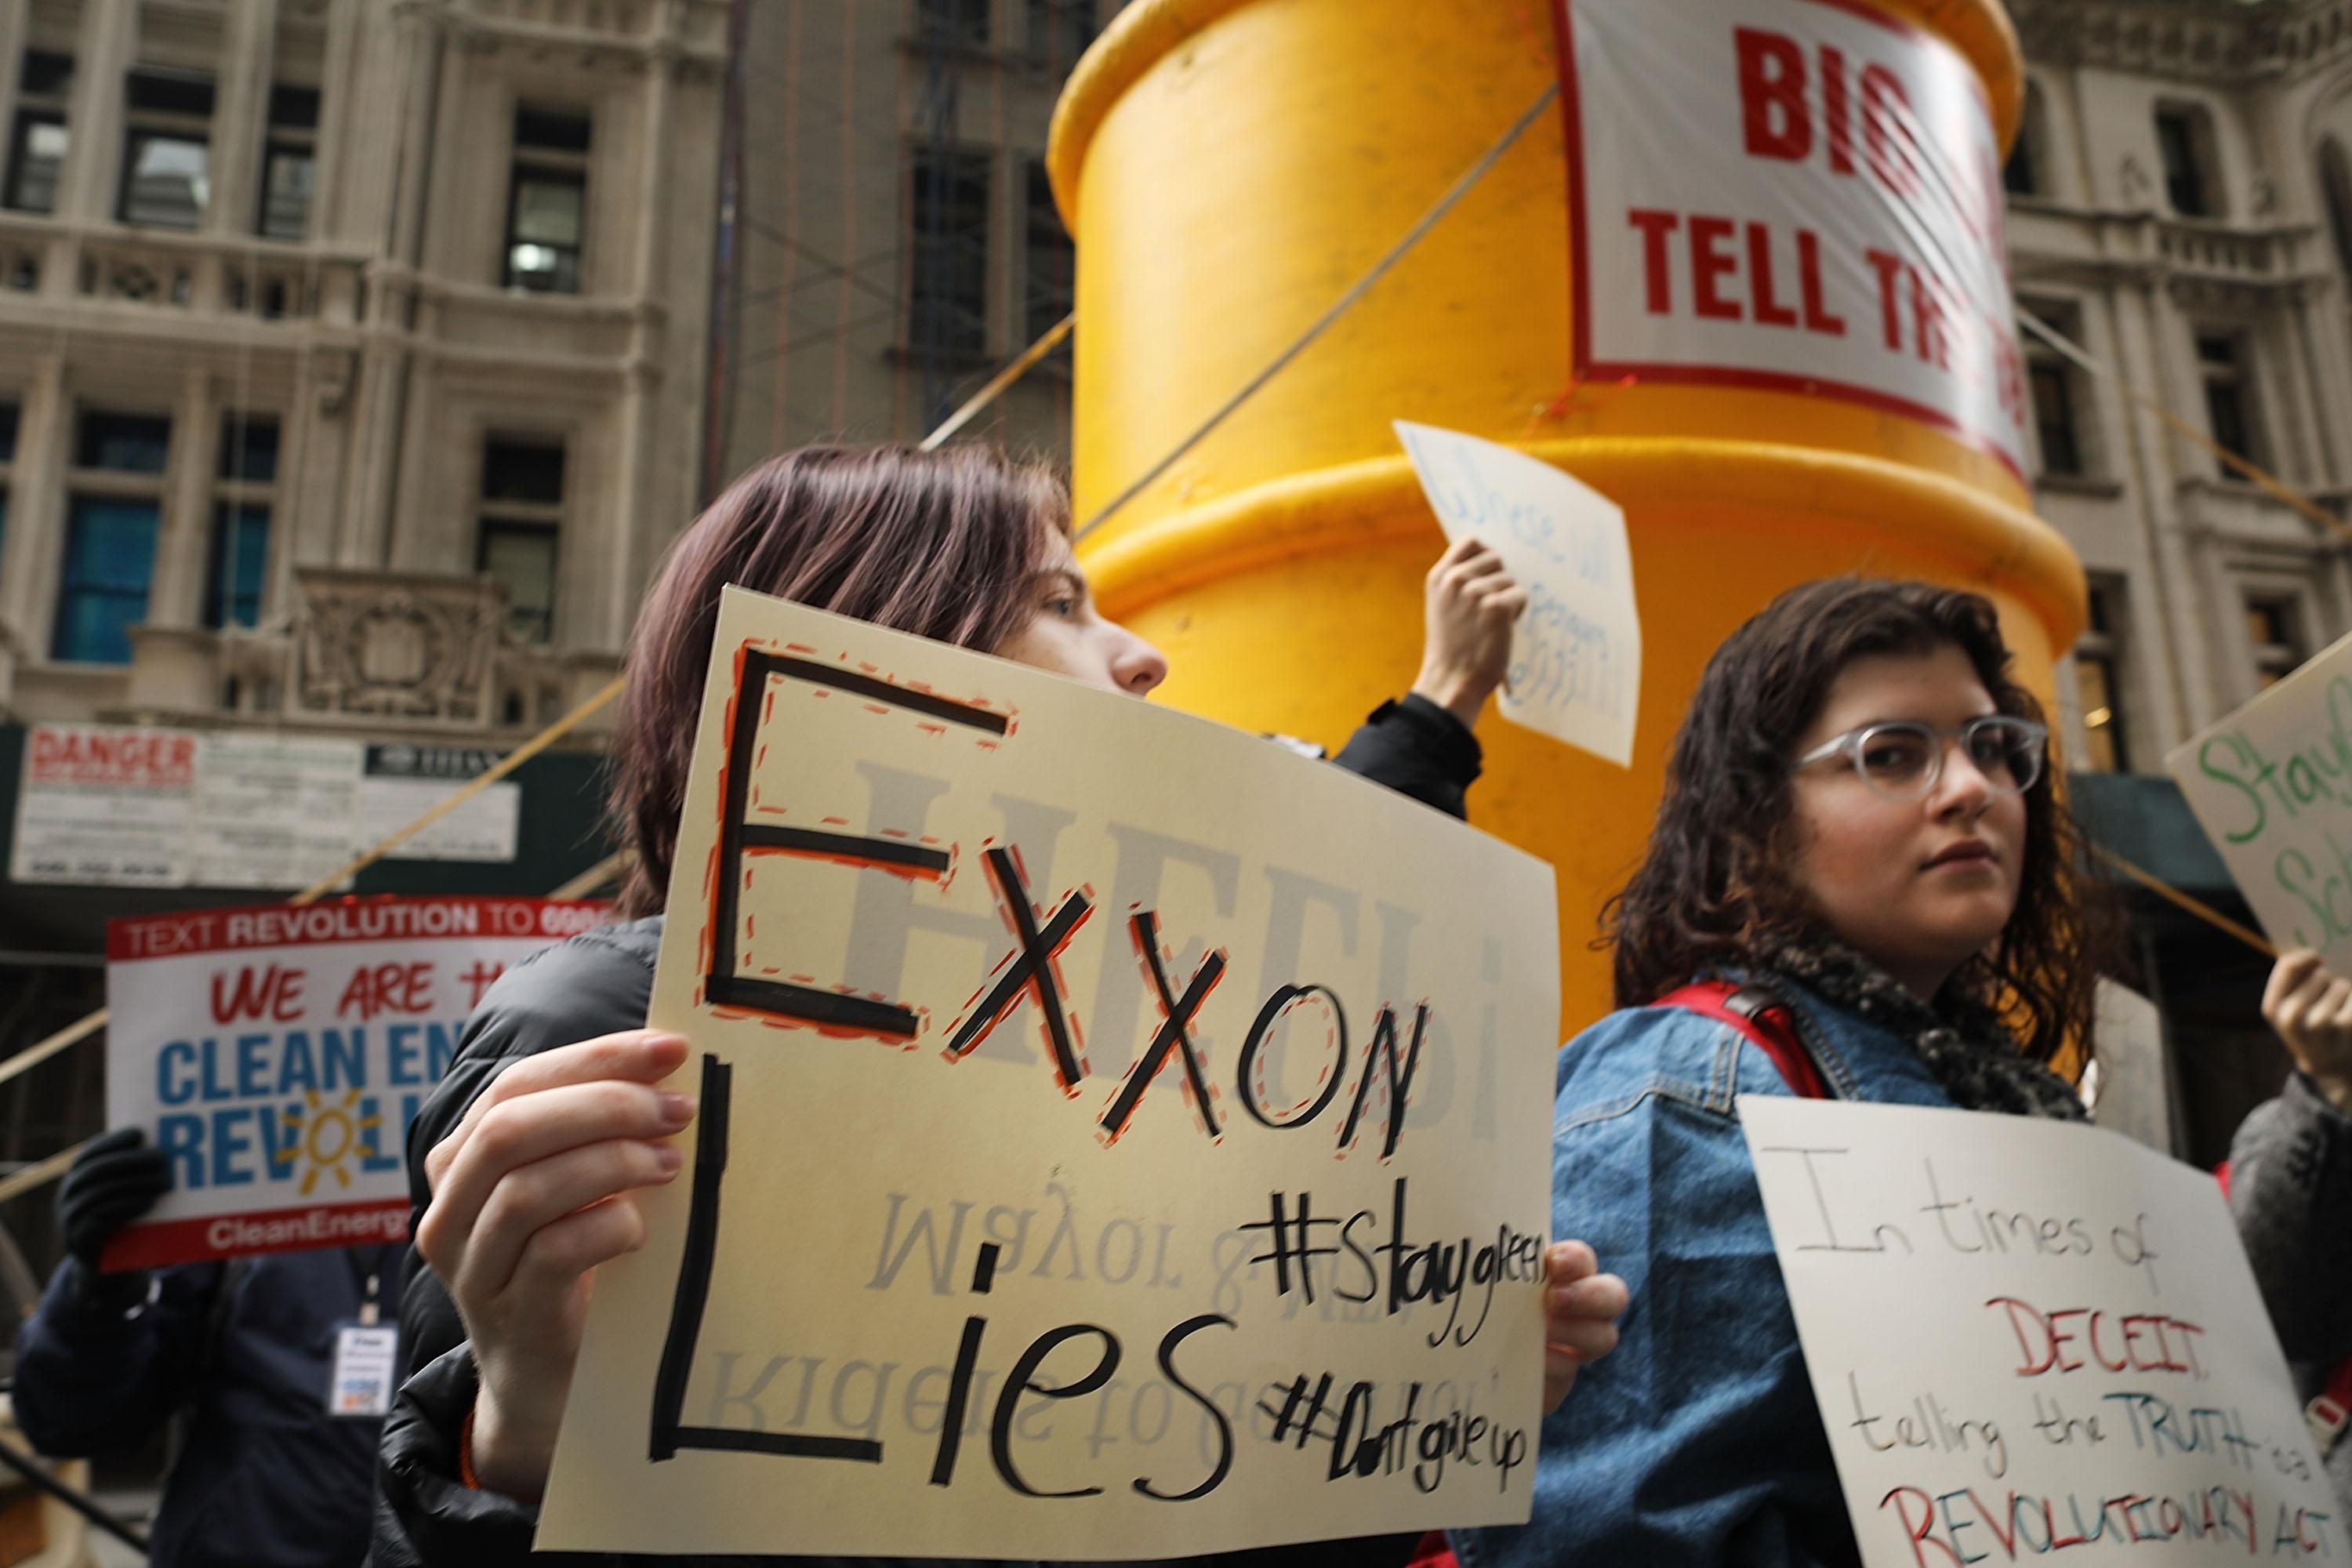 "Exxon lies" sign at protest